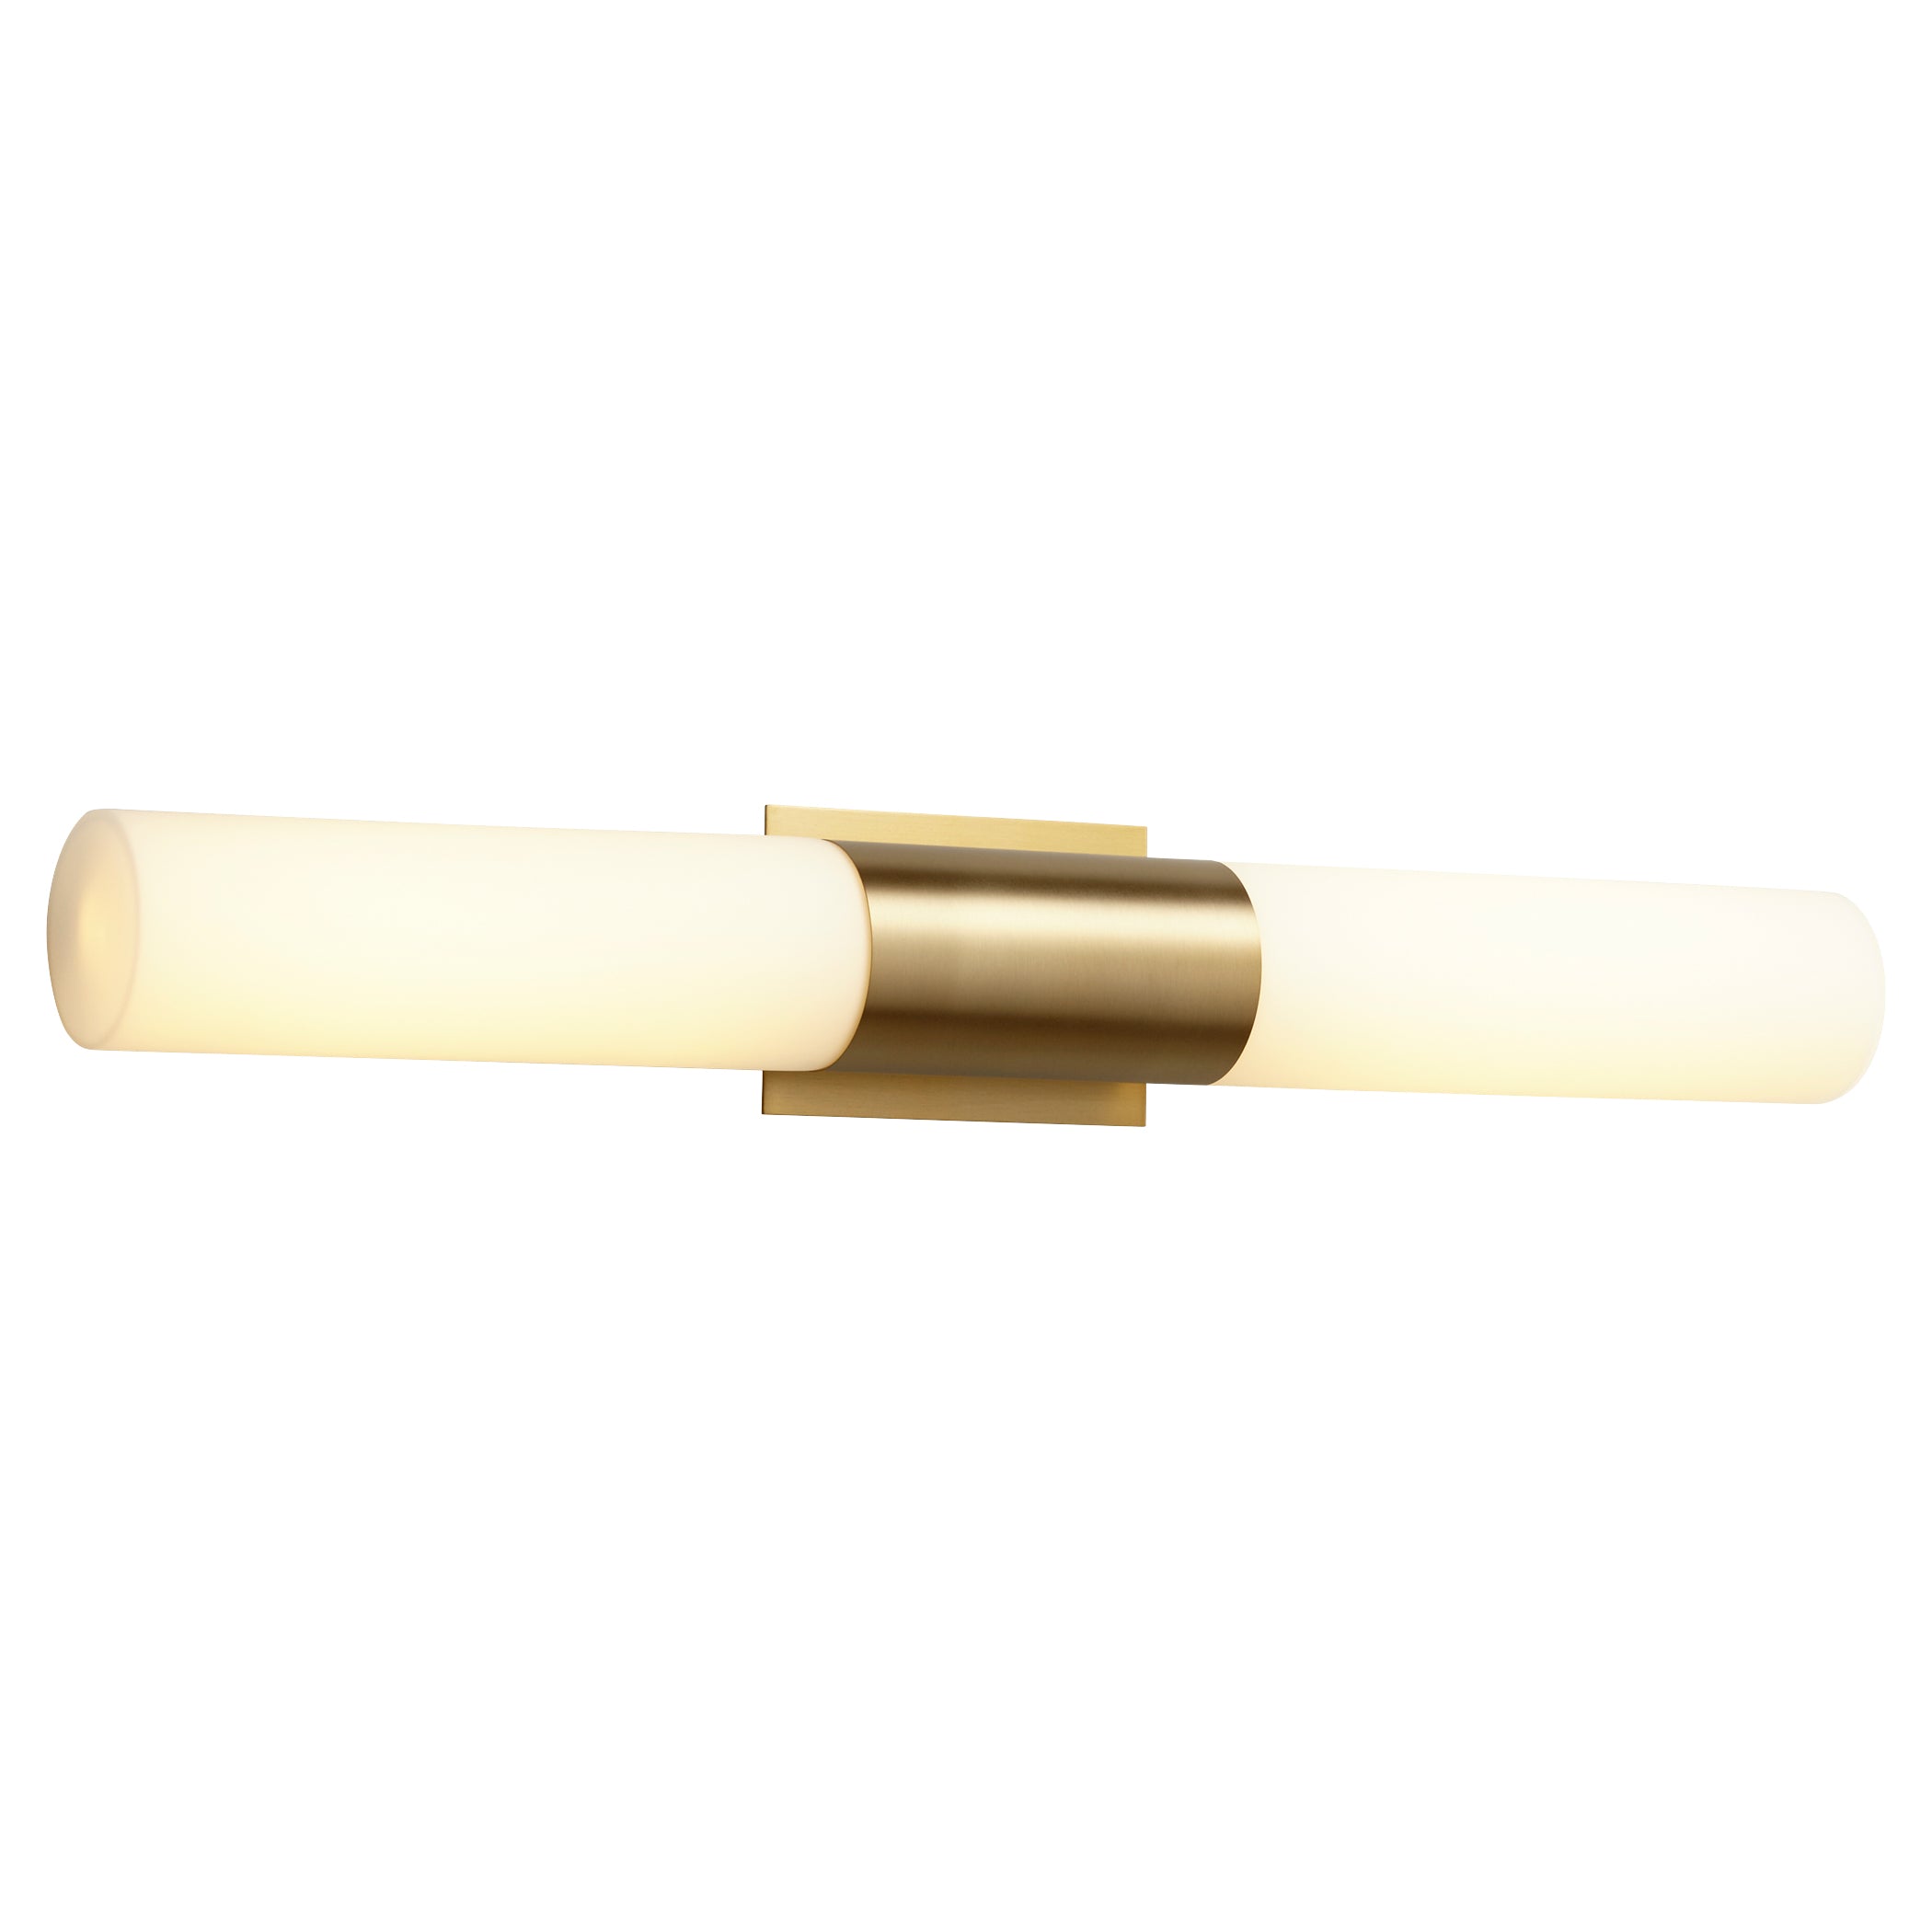 Oxygen Magnum 3-588-40 Sconces - Aged Brass